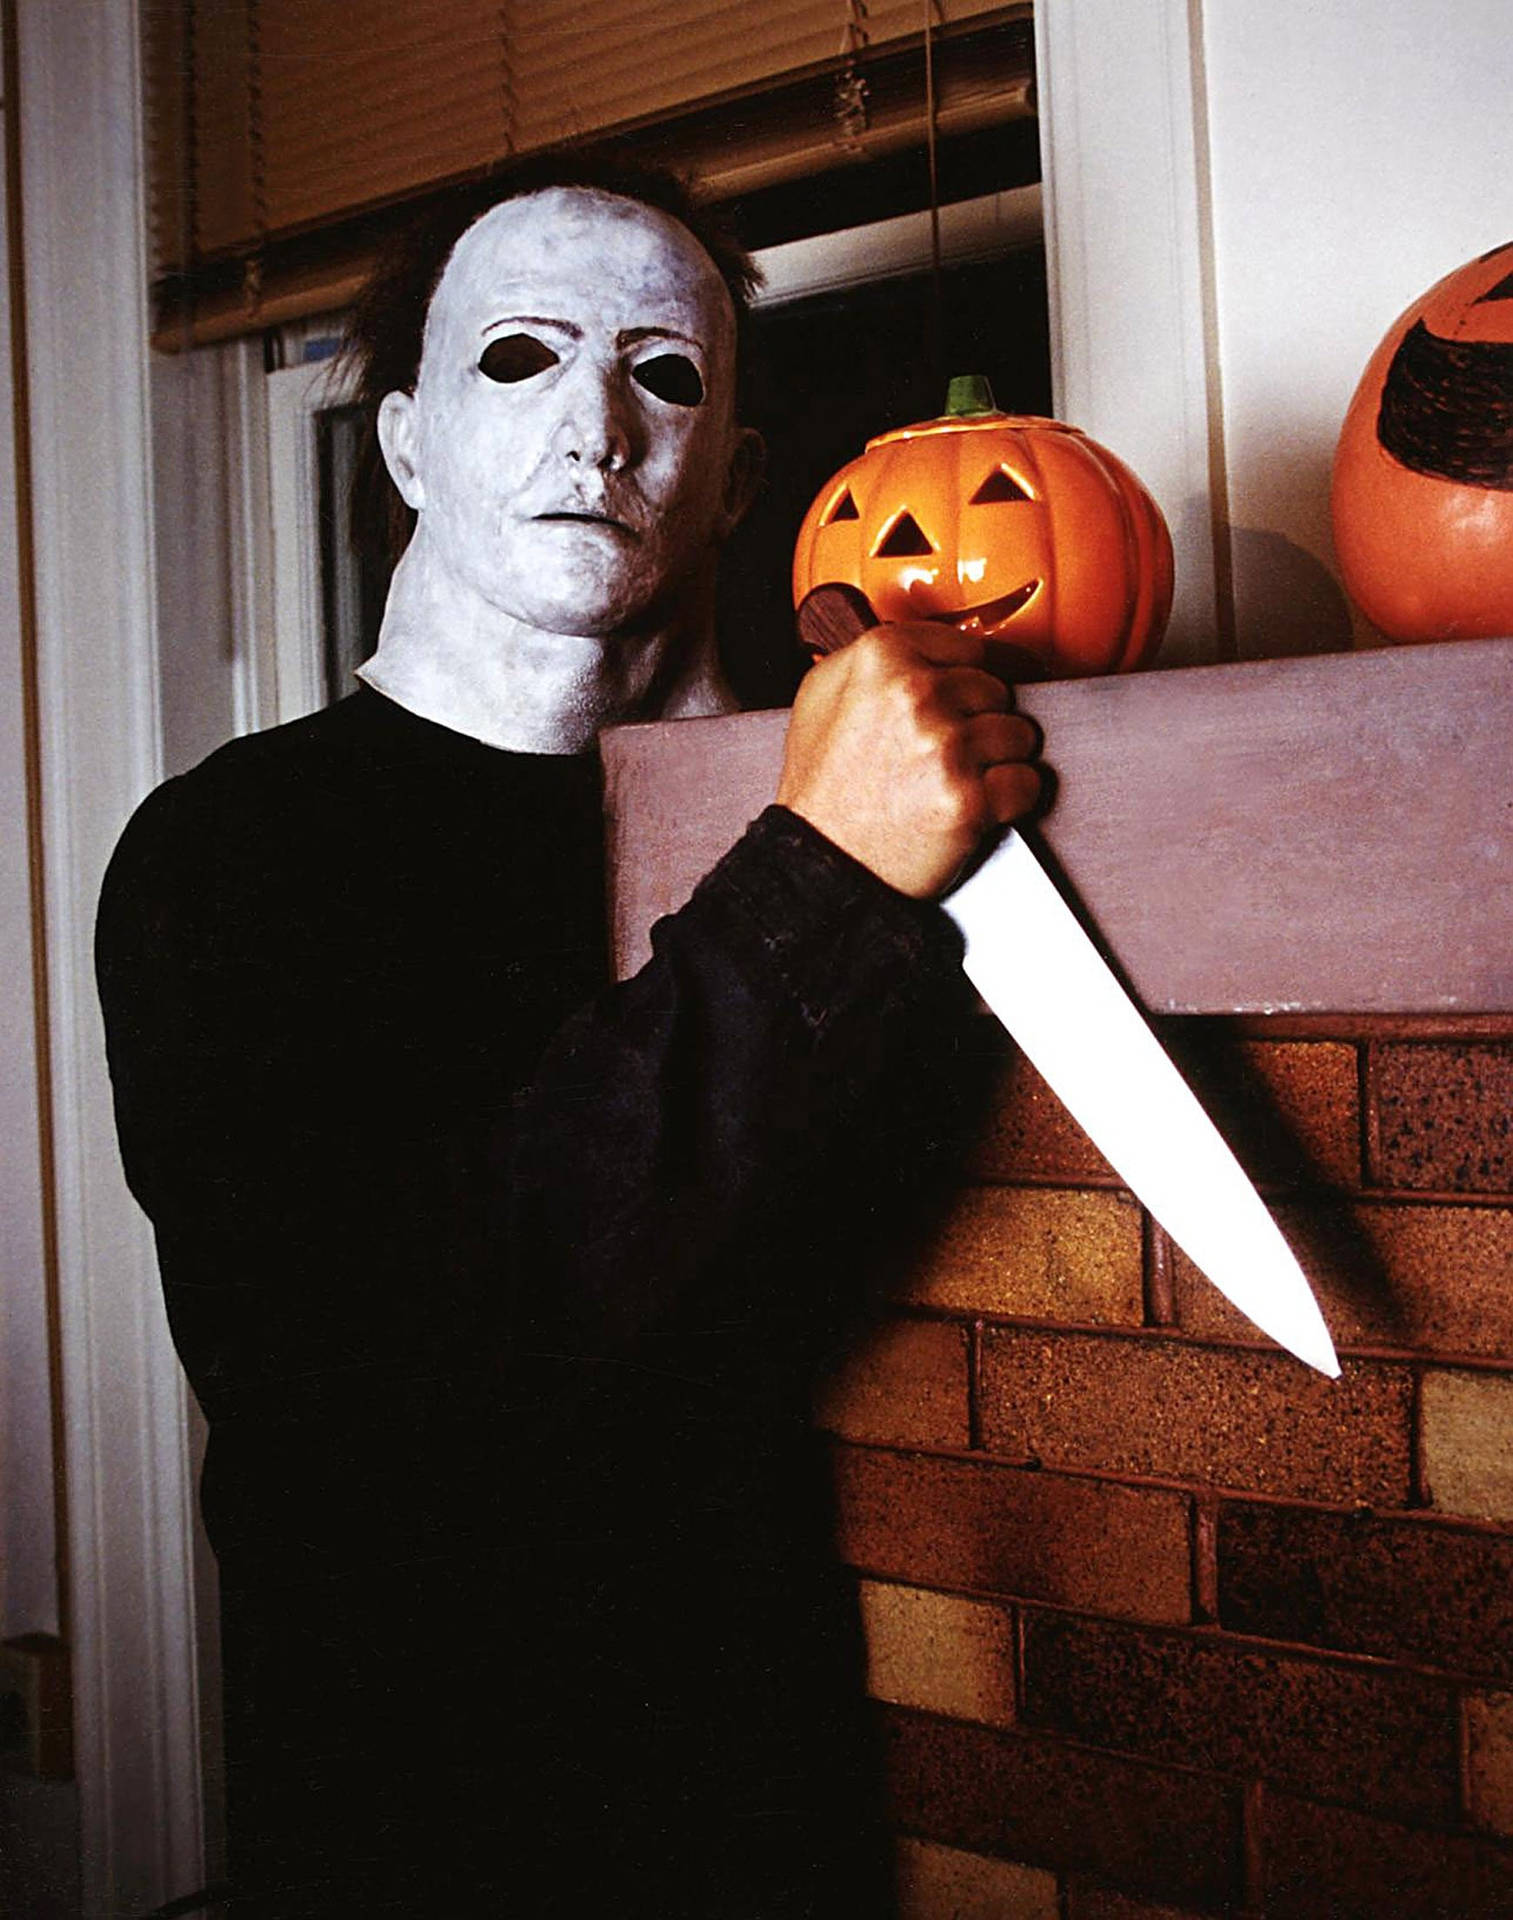 Laimagen De Perfil De Halloween De Michael Myers, El Asesino. Fondo de pantalla